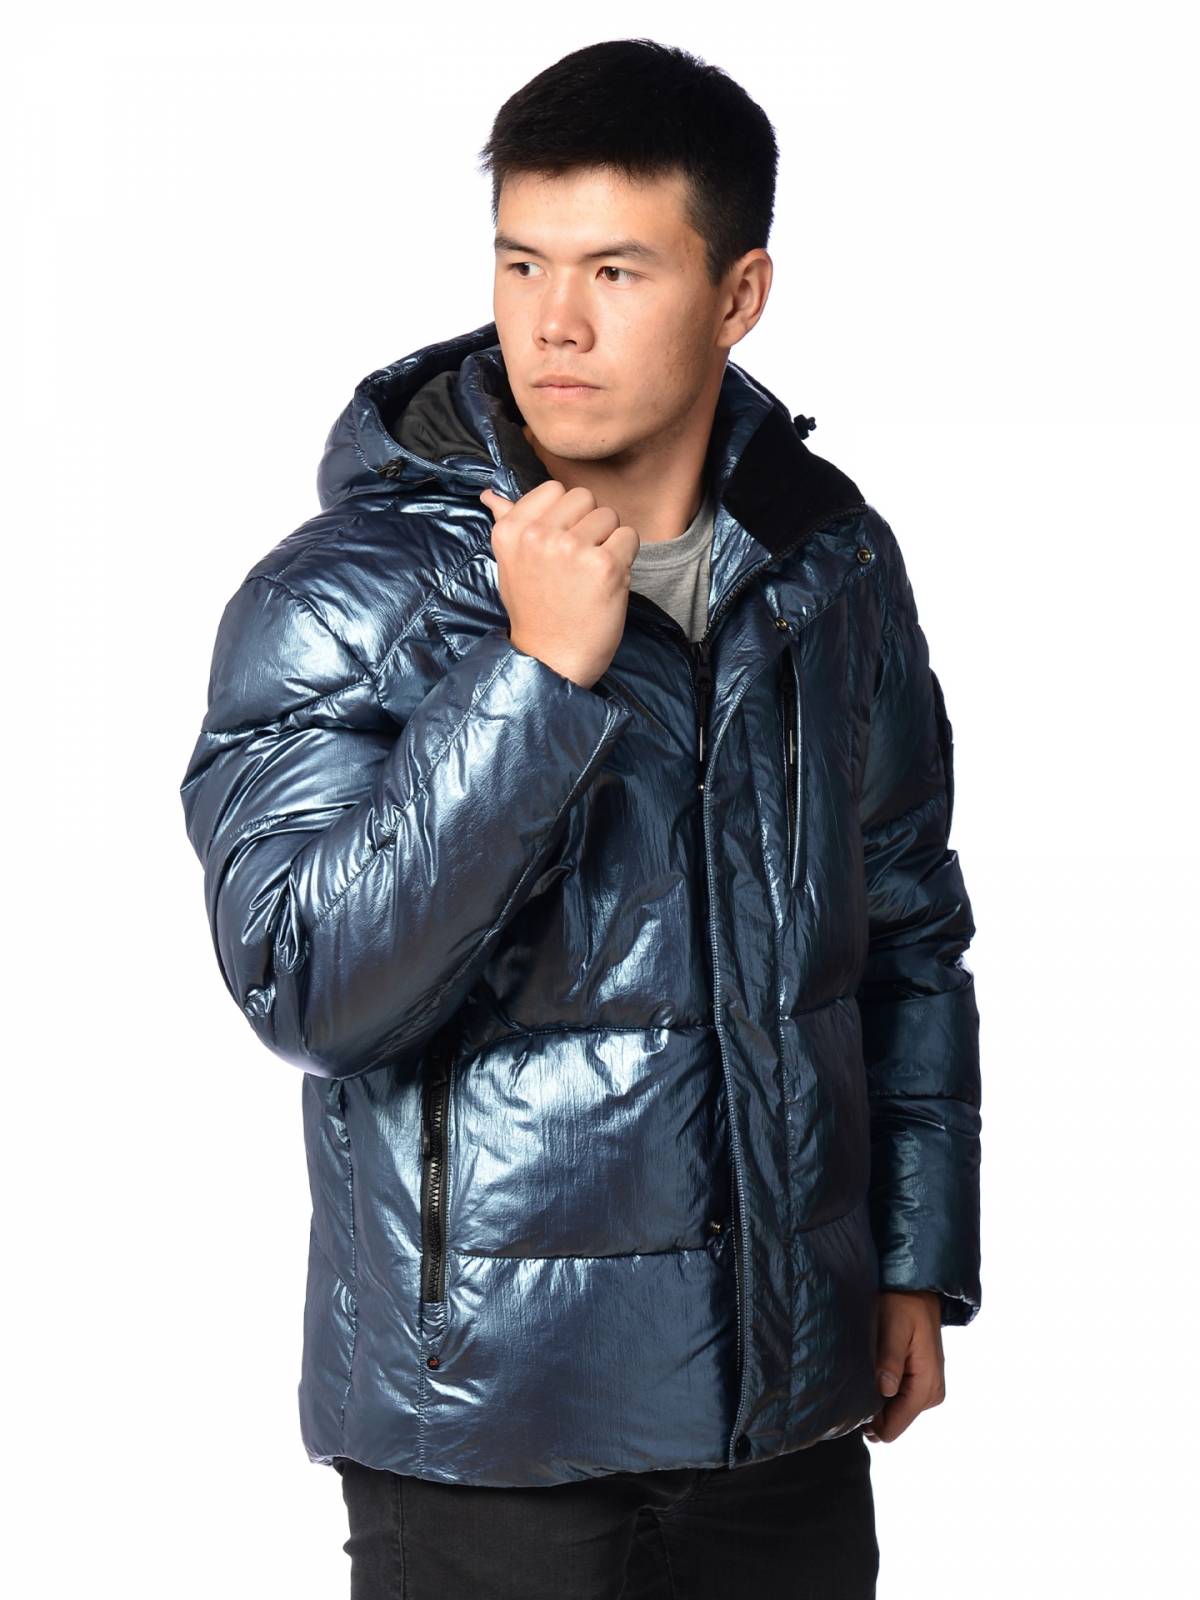 Зимняя куртка мужская Shark Force 3917 синяя 48 RU